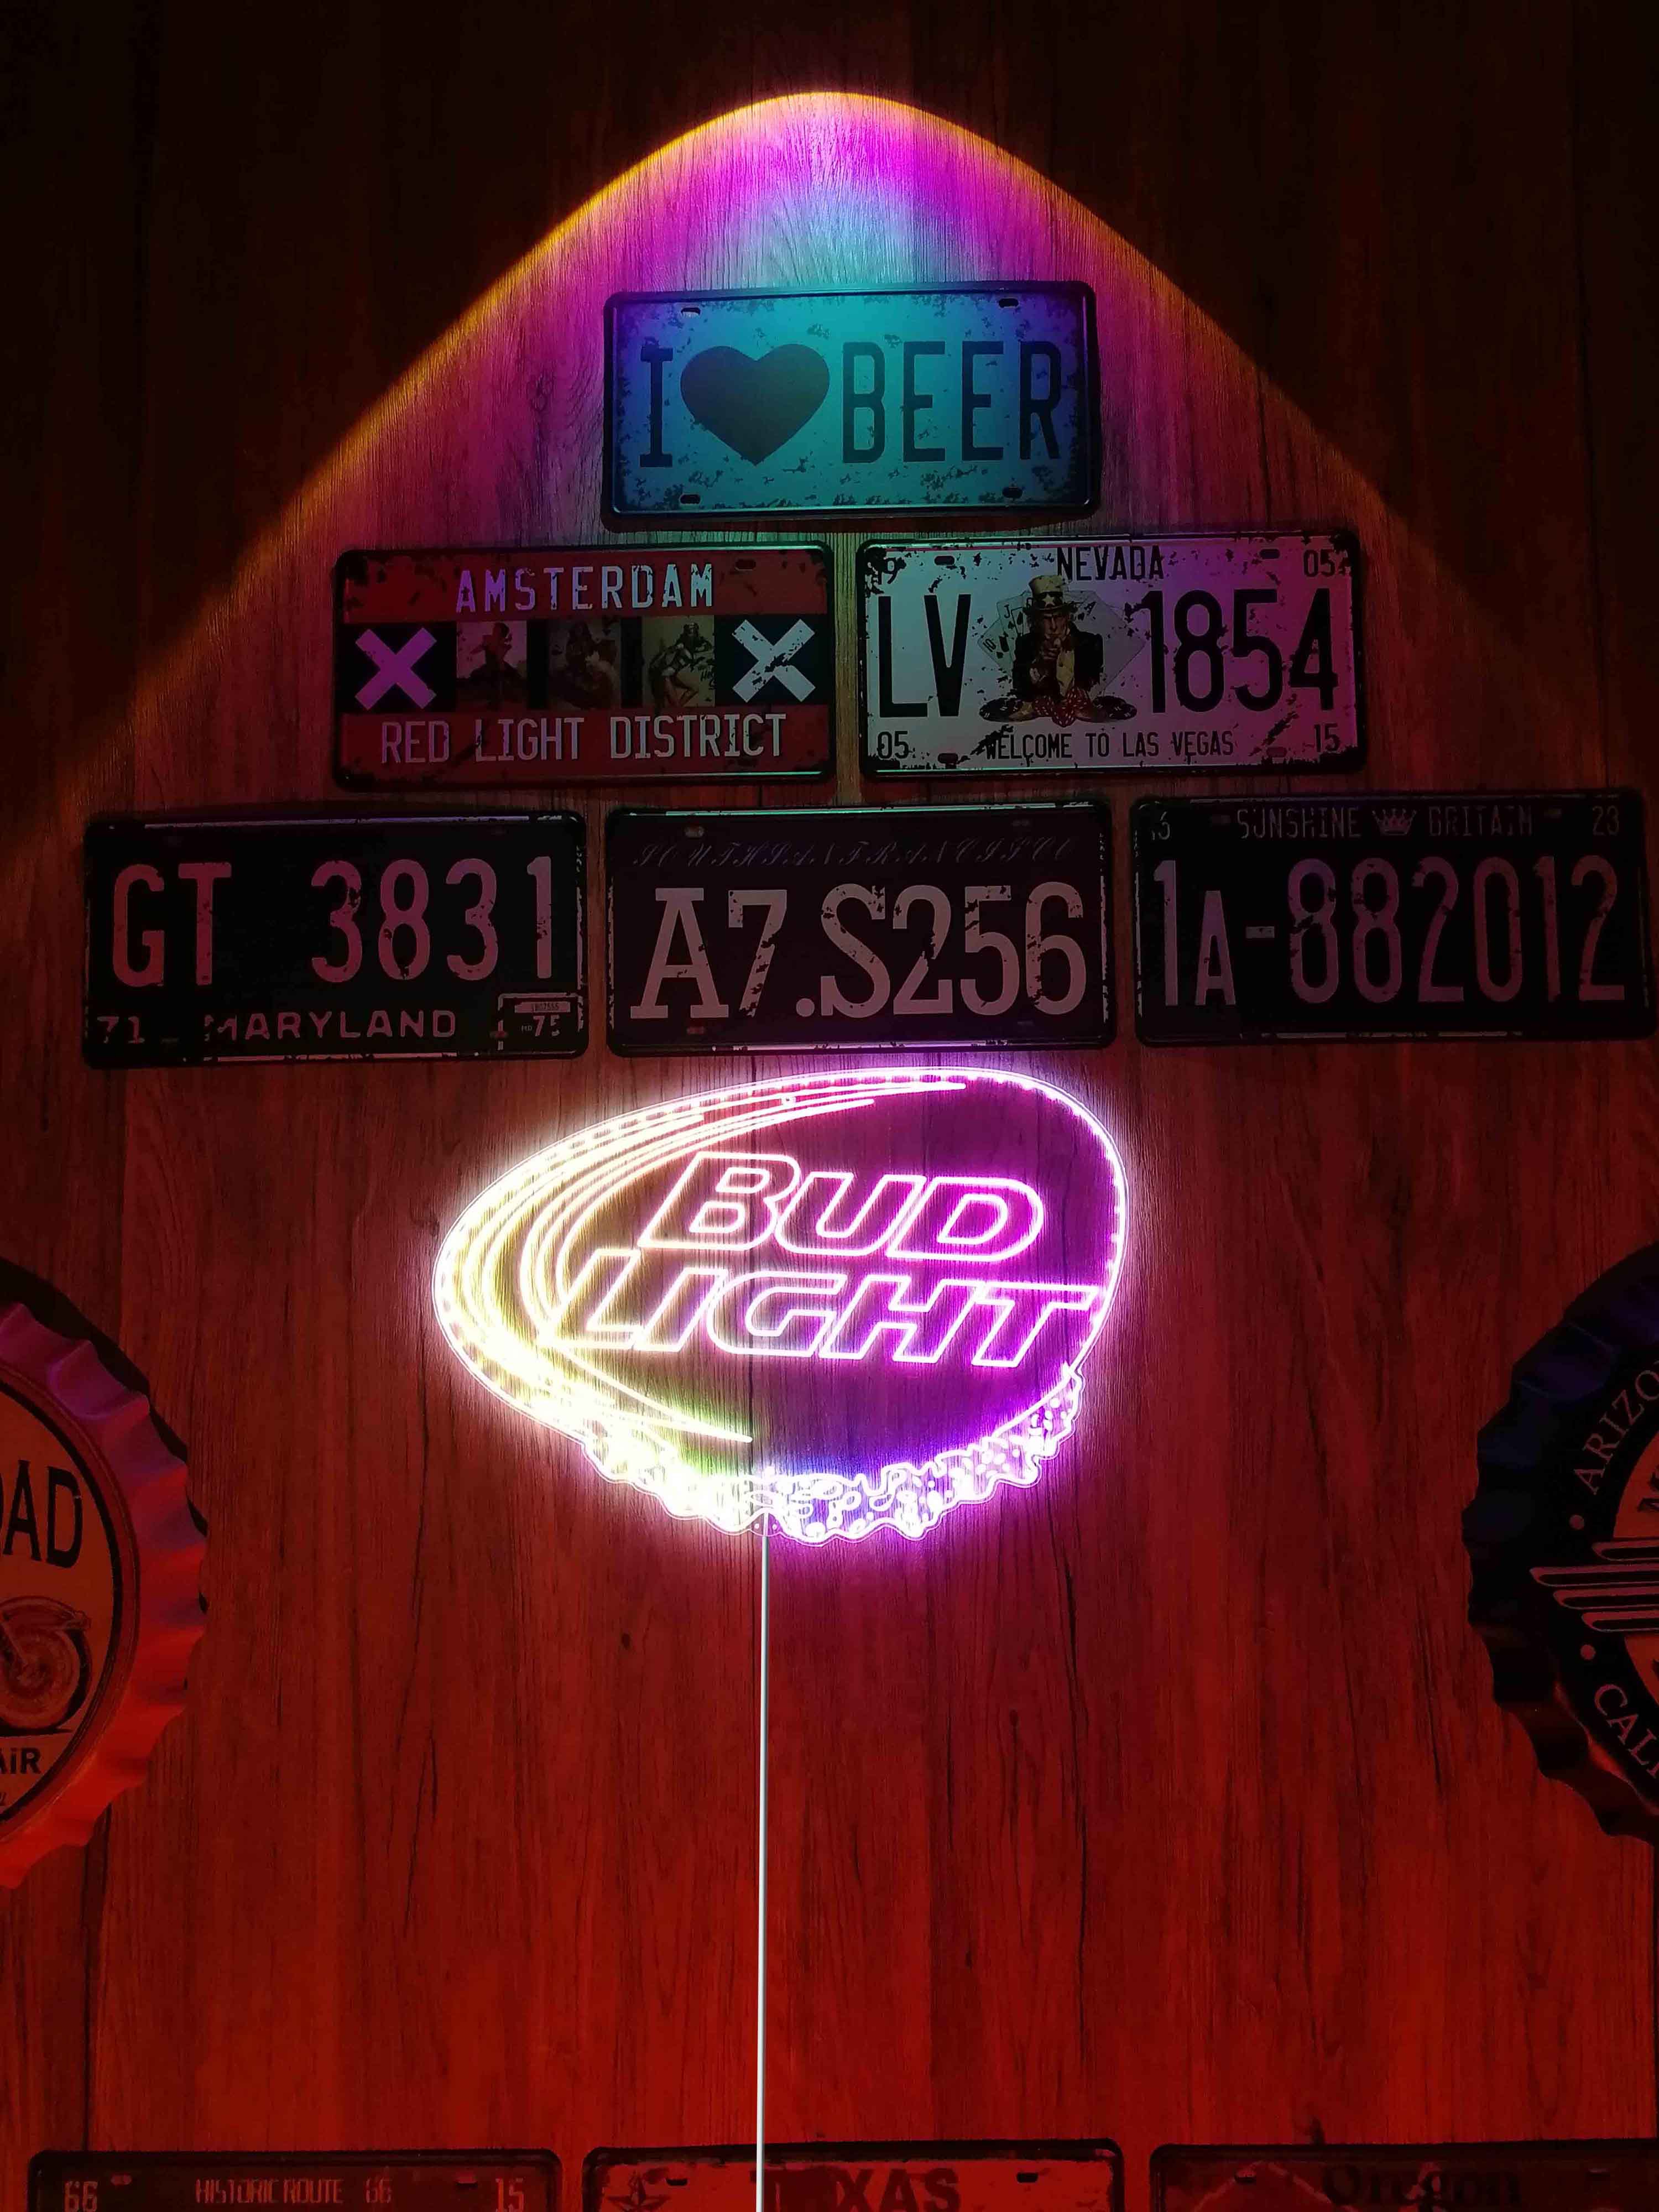 Bud Light Dynamic RGB Edge Lit LED Sign